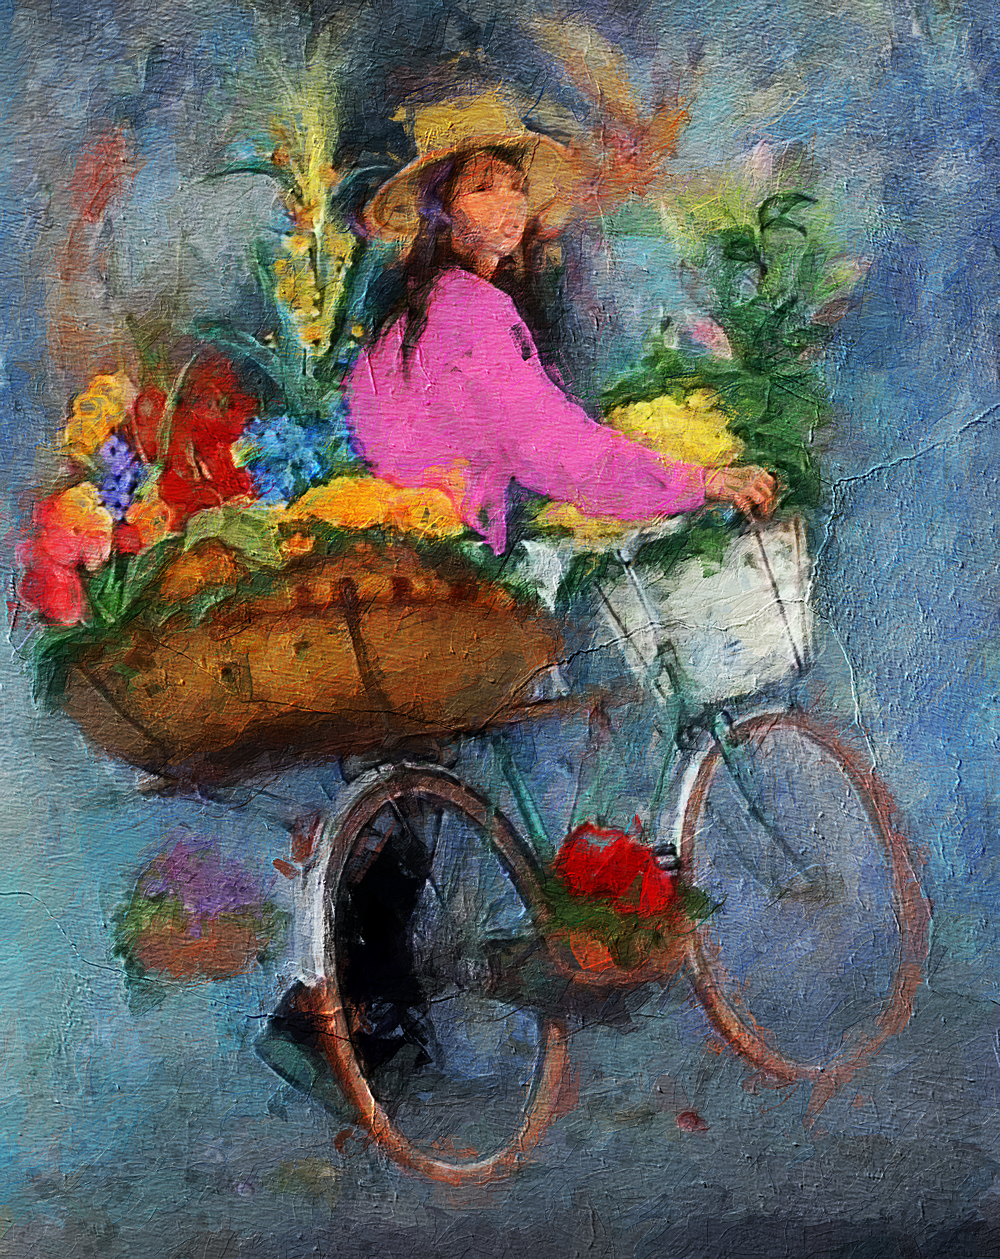 Thai Flower Sellers painting on canvas TFS0009